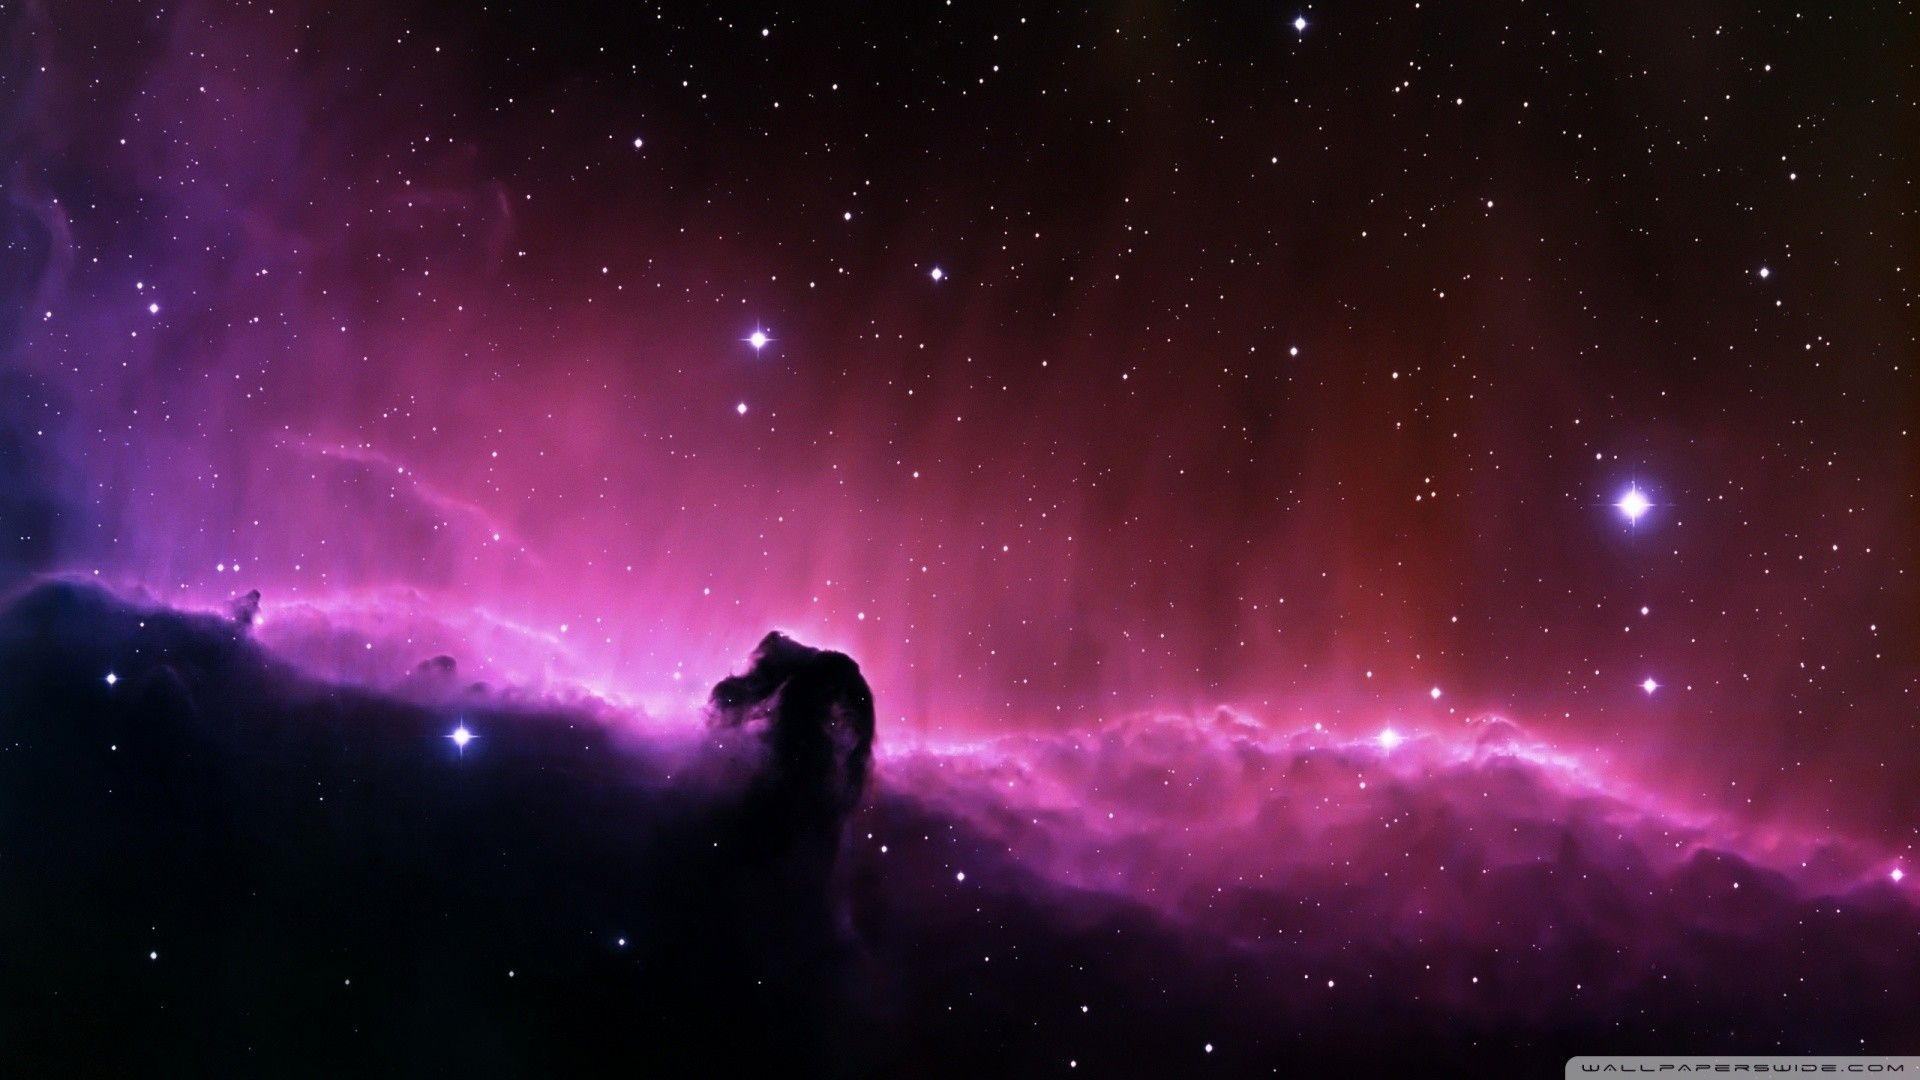 100 Nebula Pictures HQ  Download Free Images on Unsplash